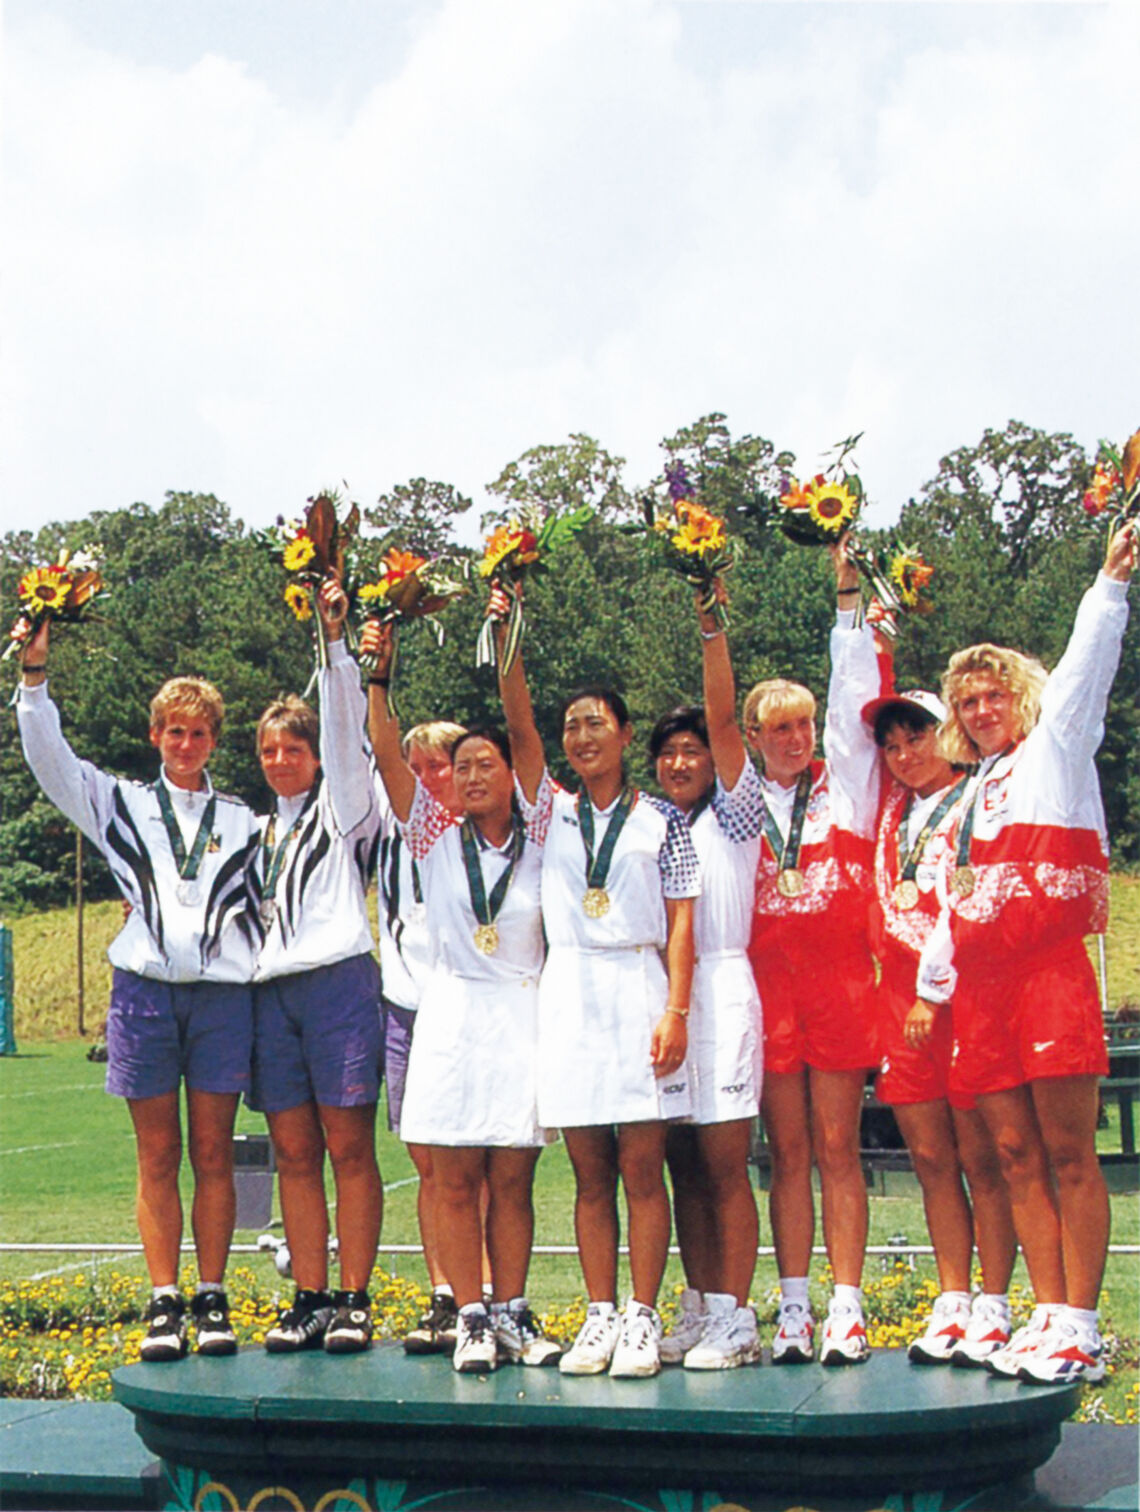 The Korean women’s team on the podium at the 1996 Olympics.